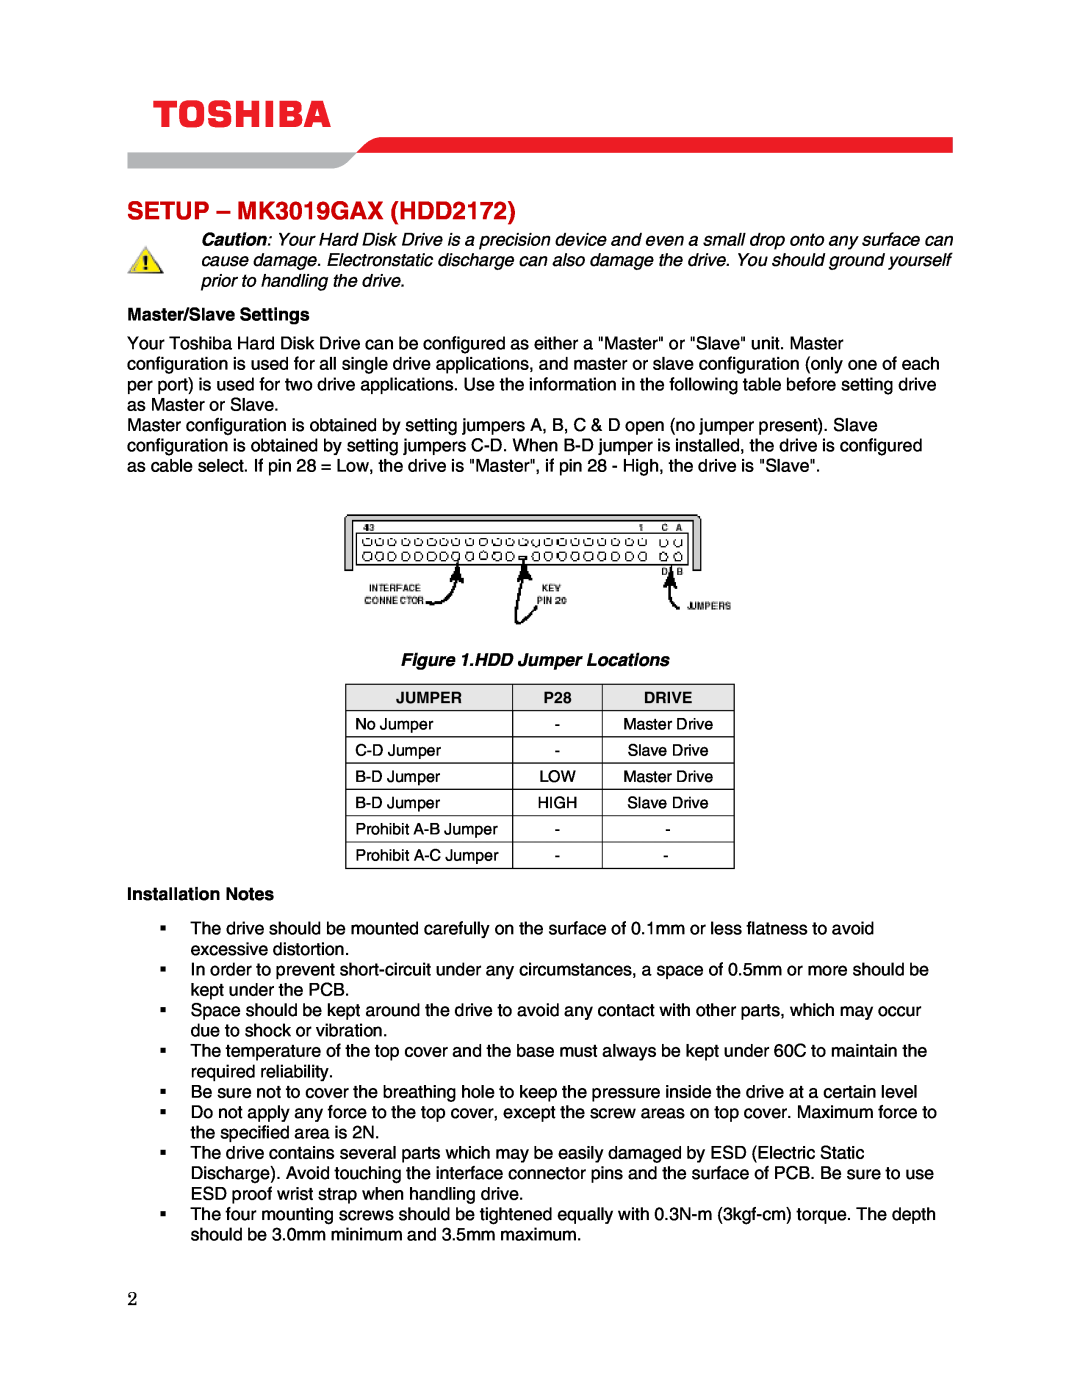 Toshiba user manual SETUP - MK3019GAX HDD2172, Master/Slave Settings, HDD Jumper Locations, Installation Notes 